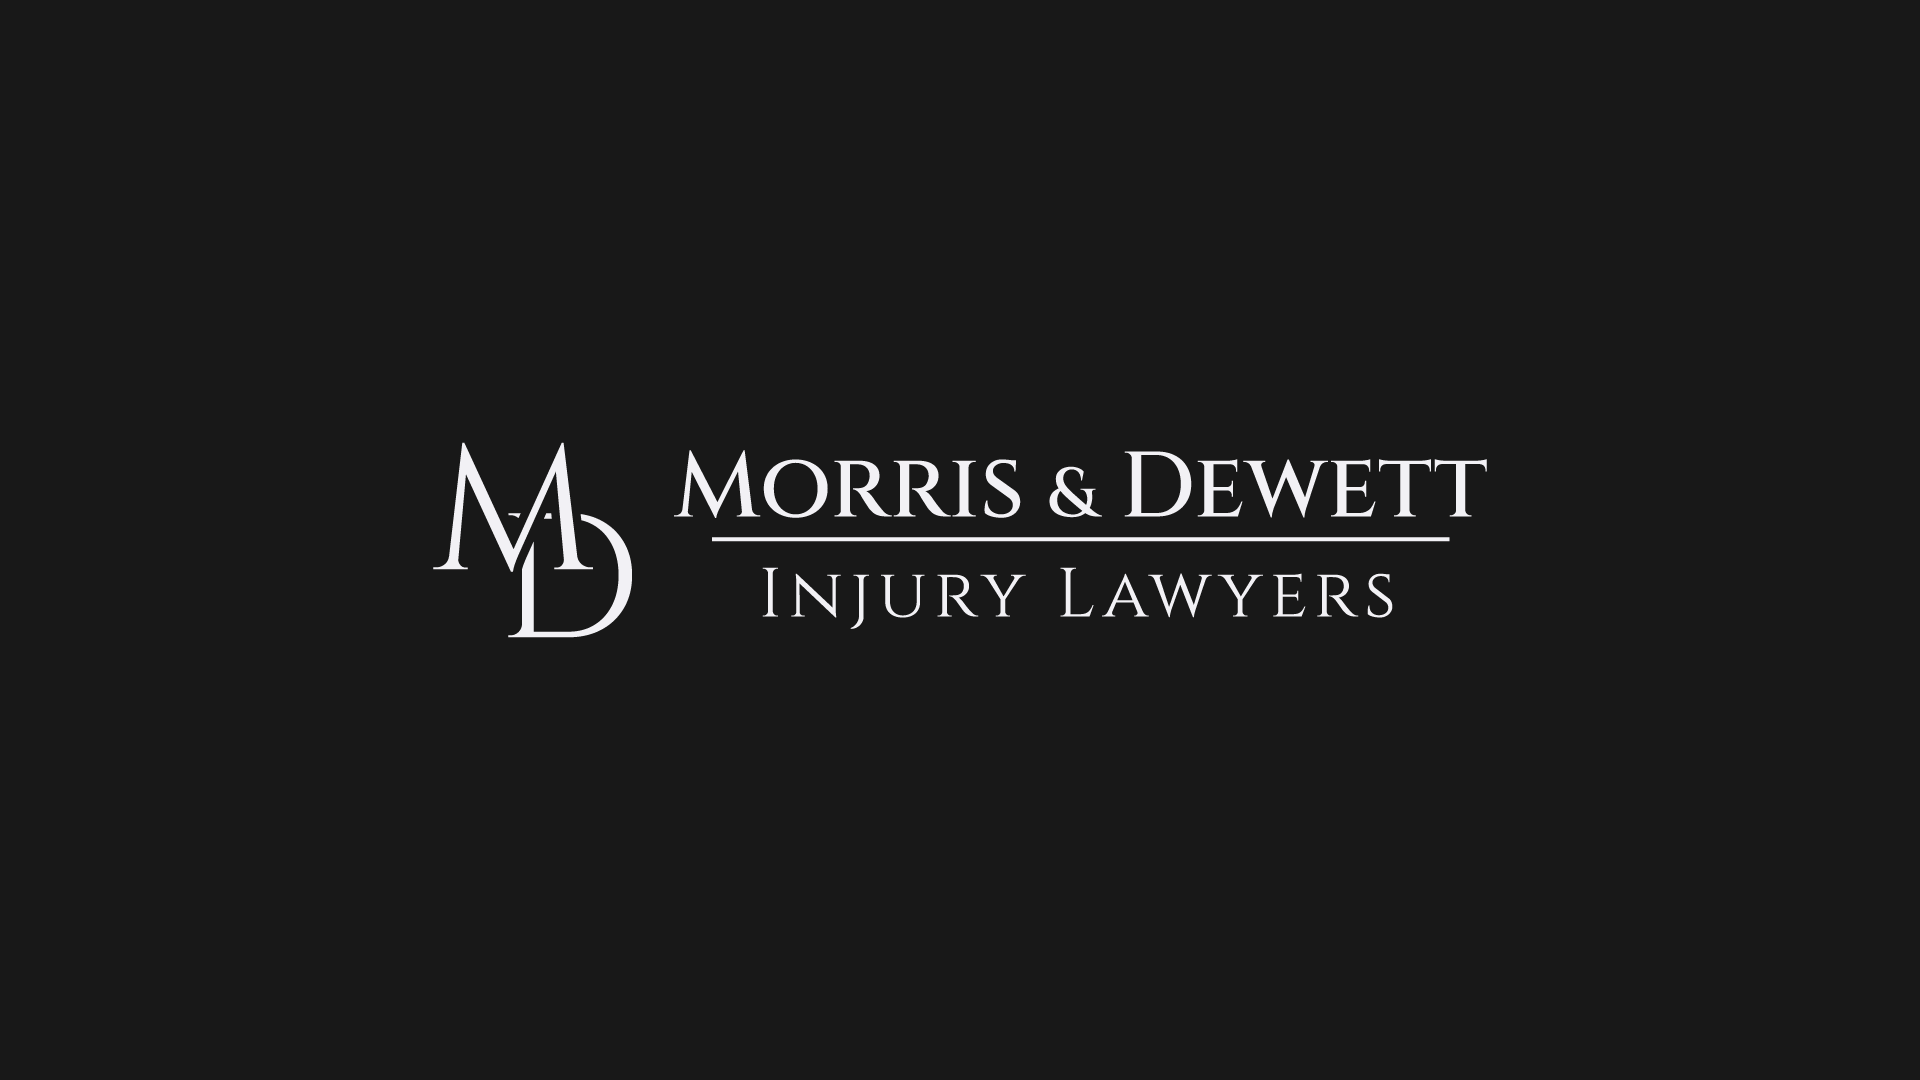 Thumbnail image of the morris and dewett logo brand